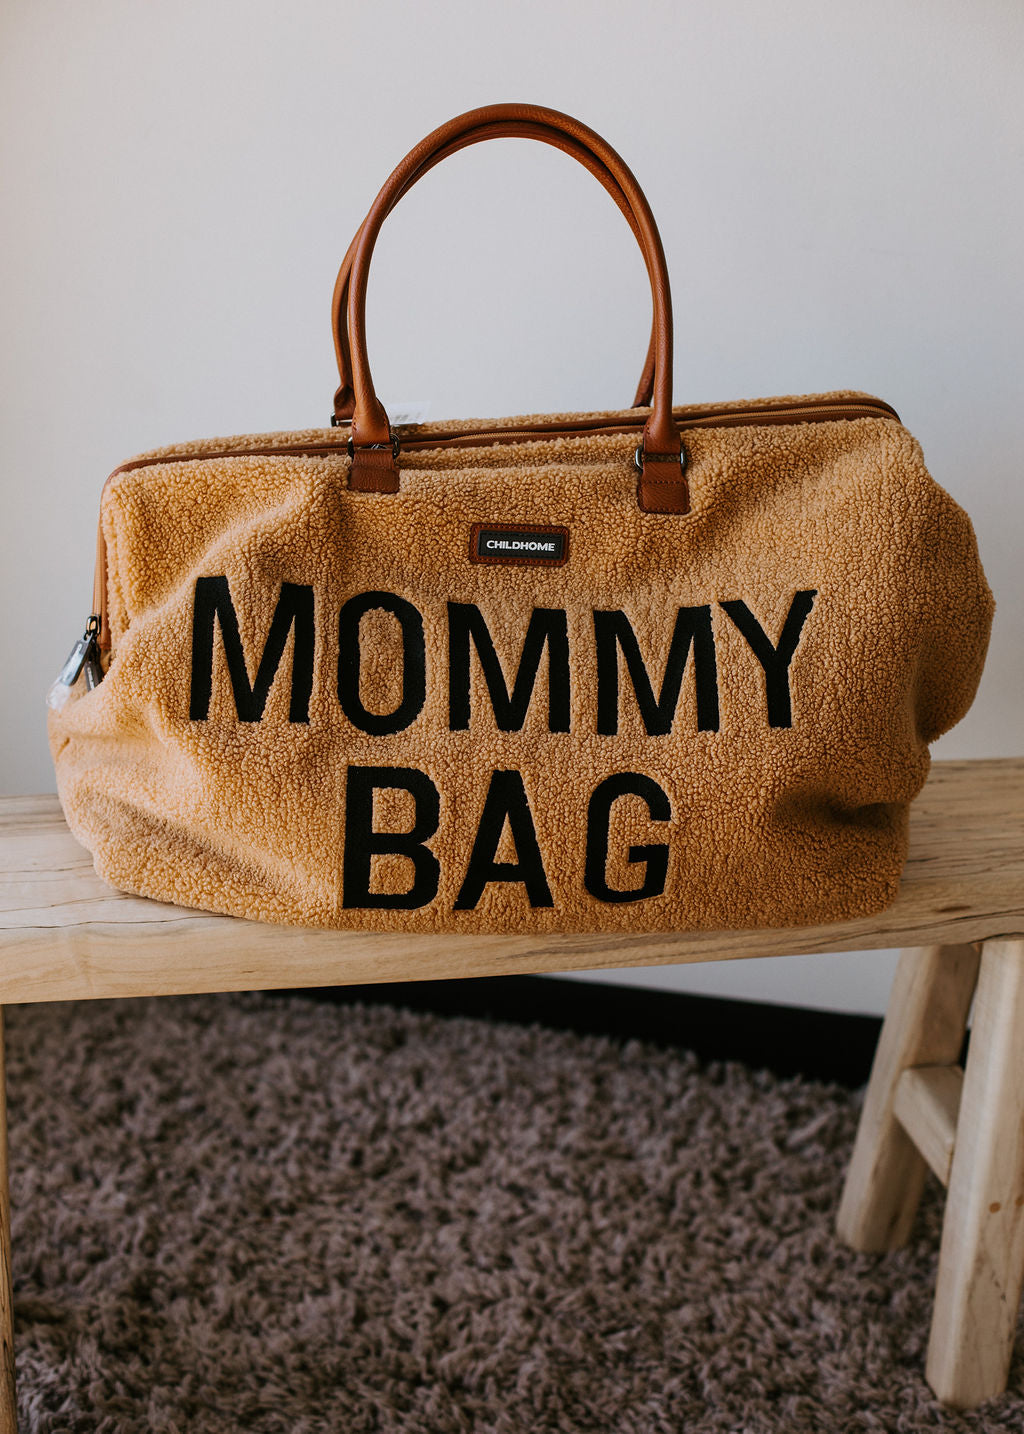 Mommy Bag - Teddy Diaper Bag